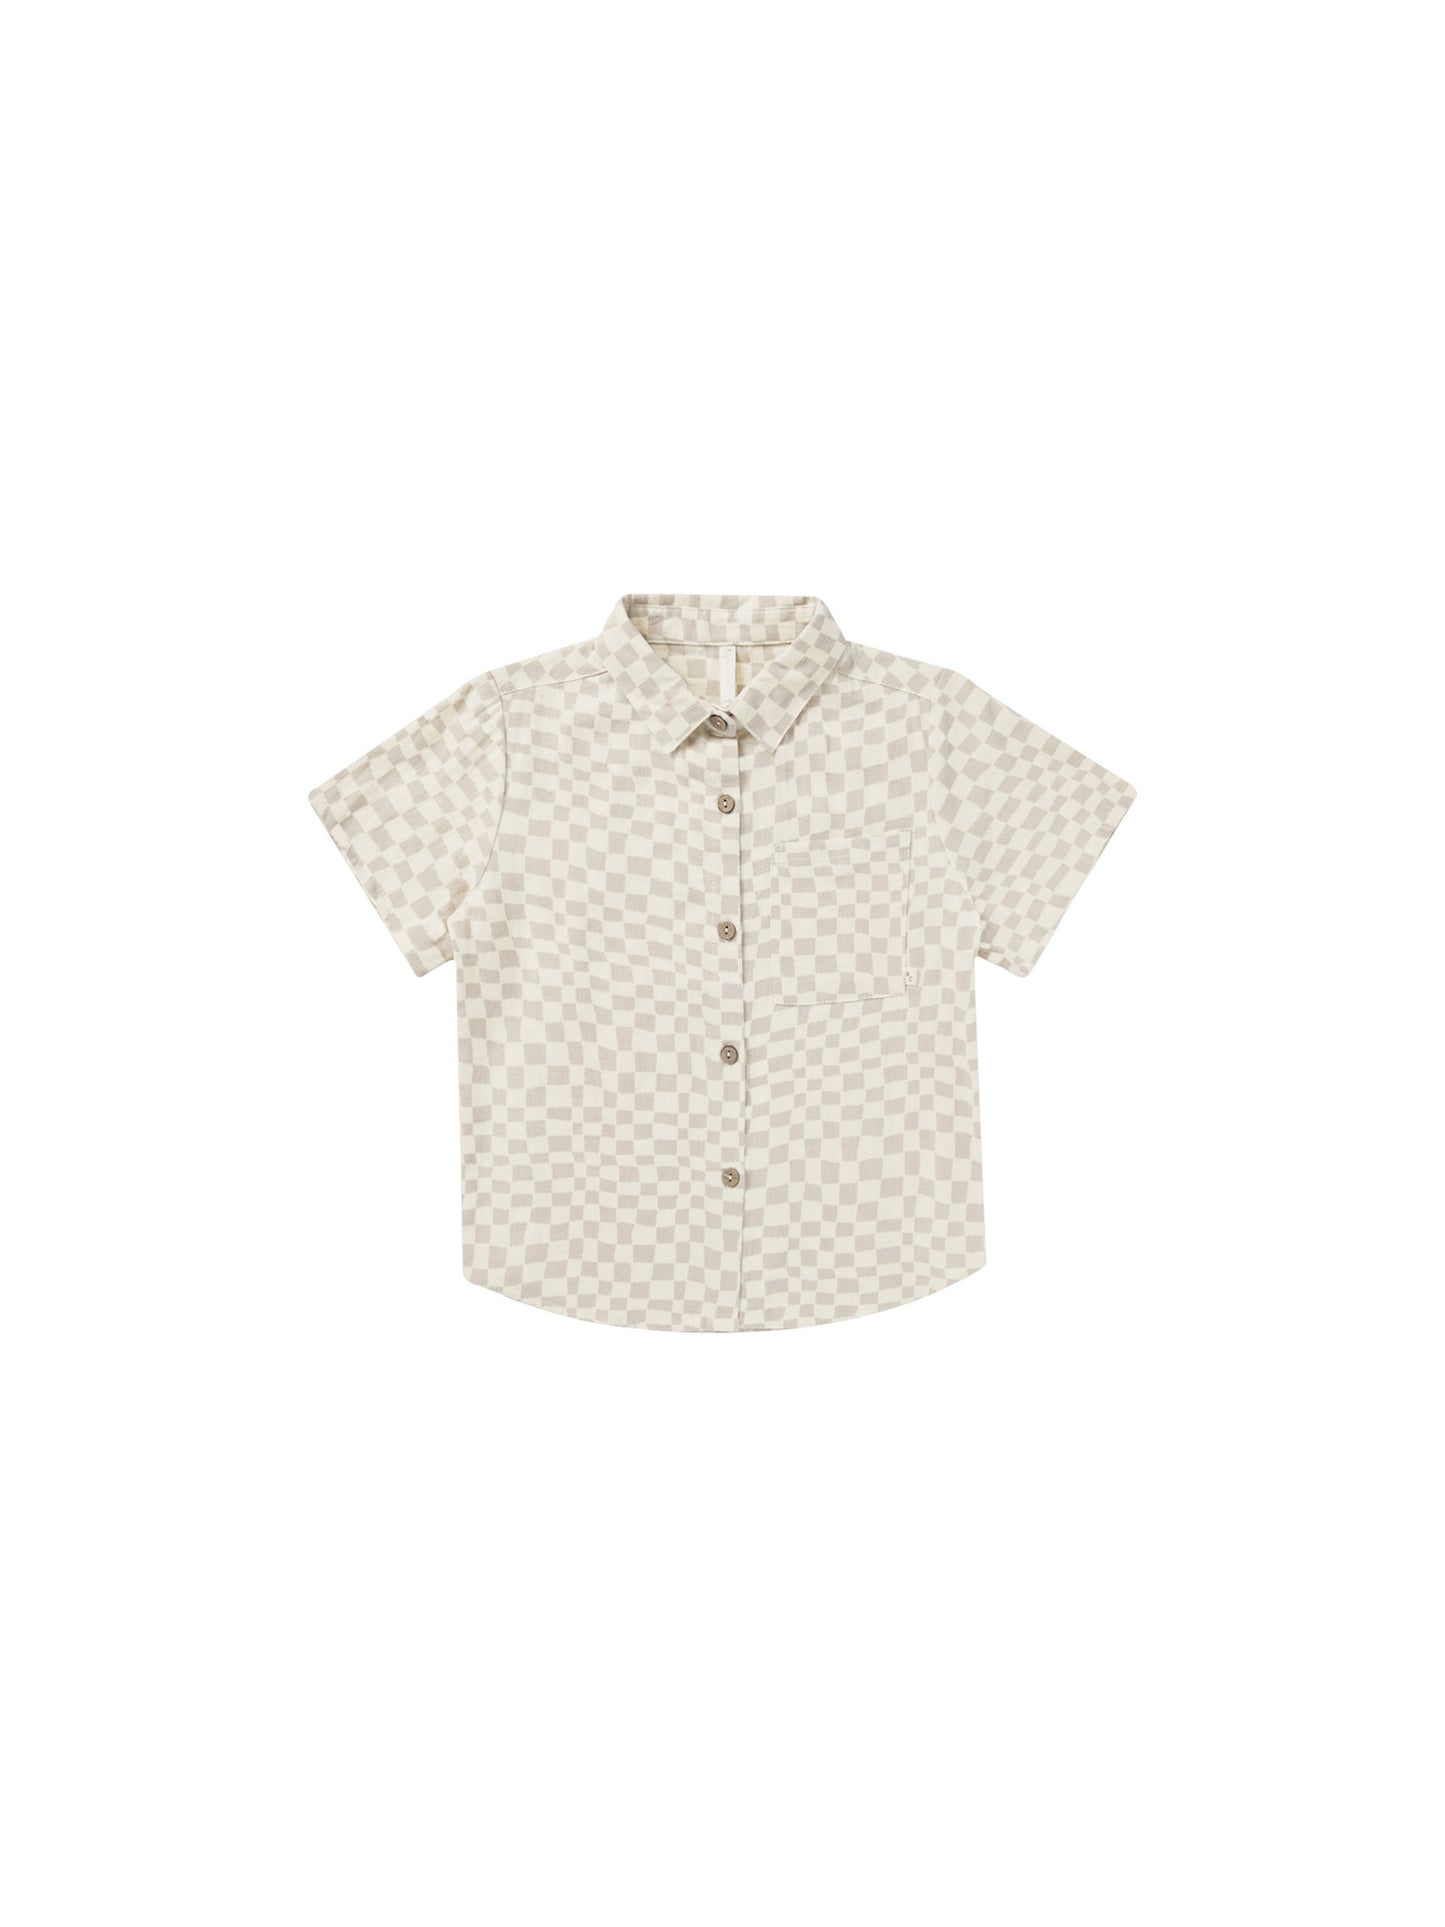 Rylee + Cru - Collared Short Sleeve Shirt - Dove Check